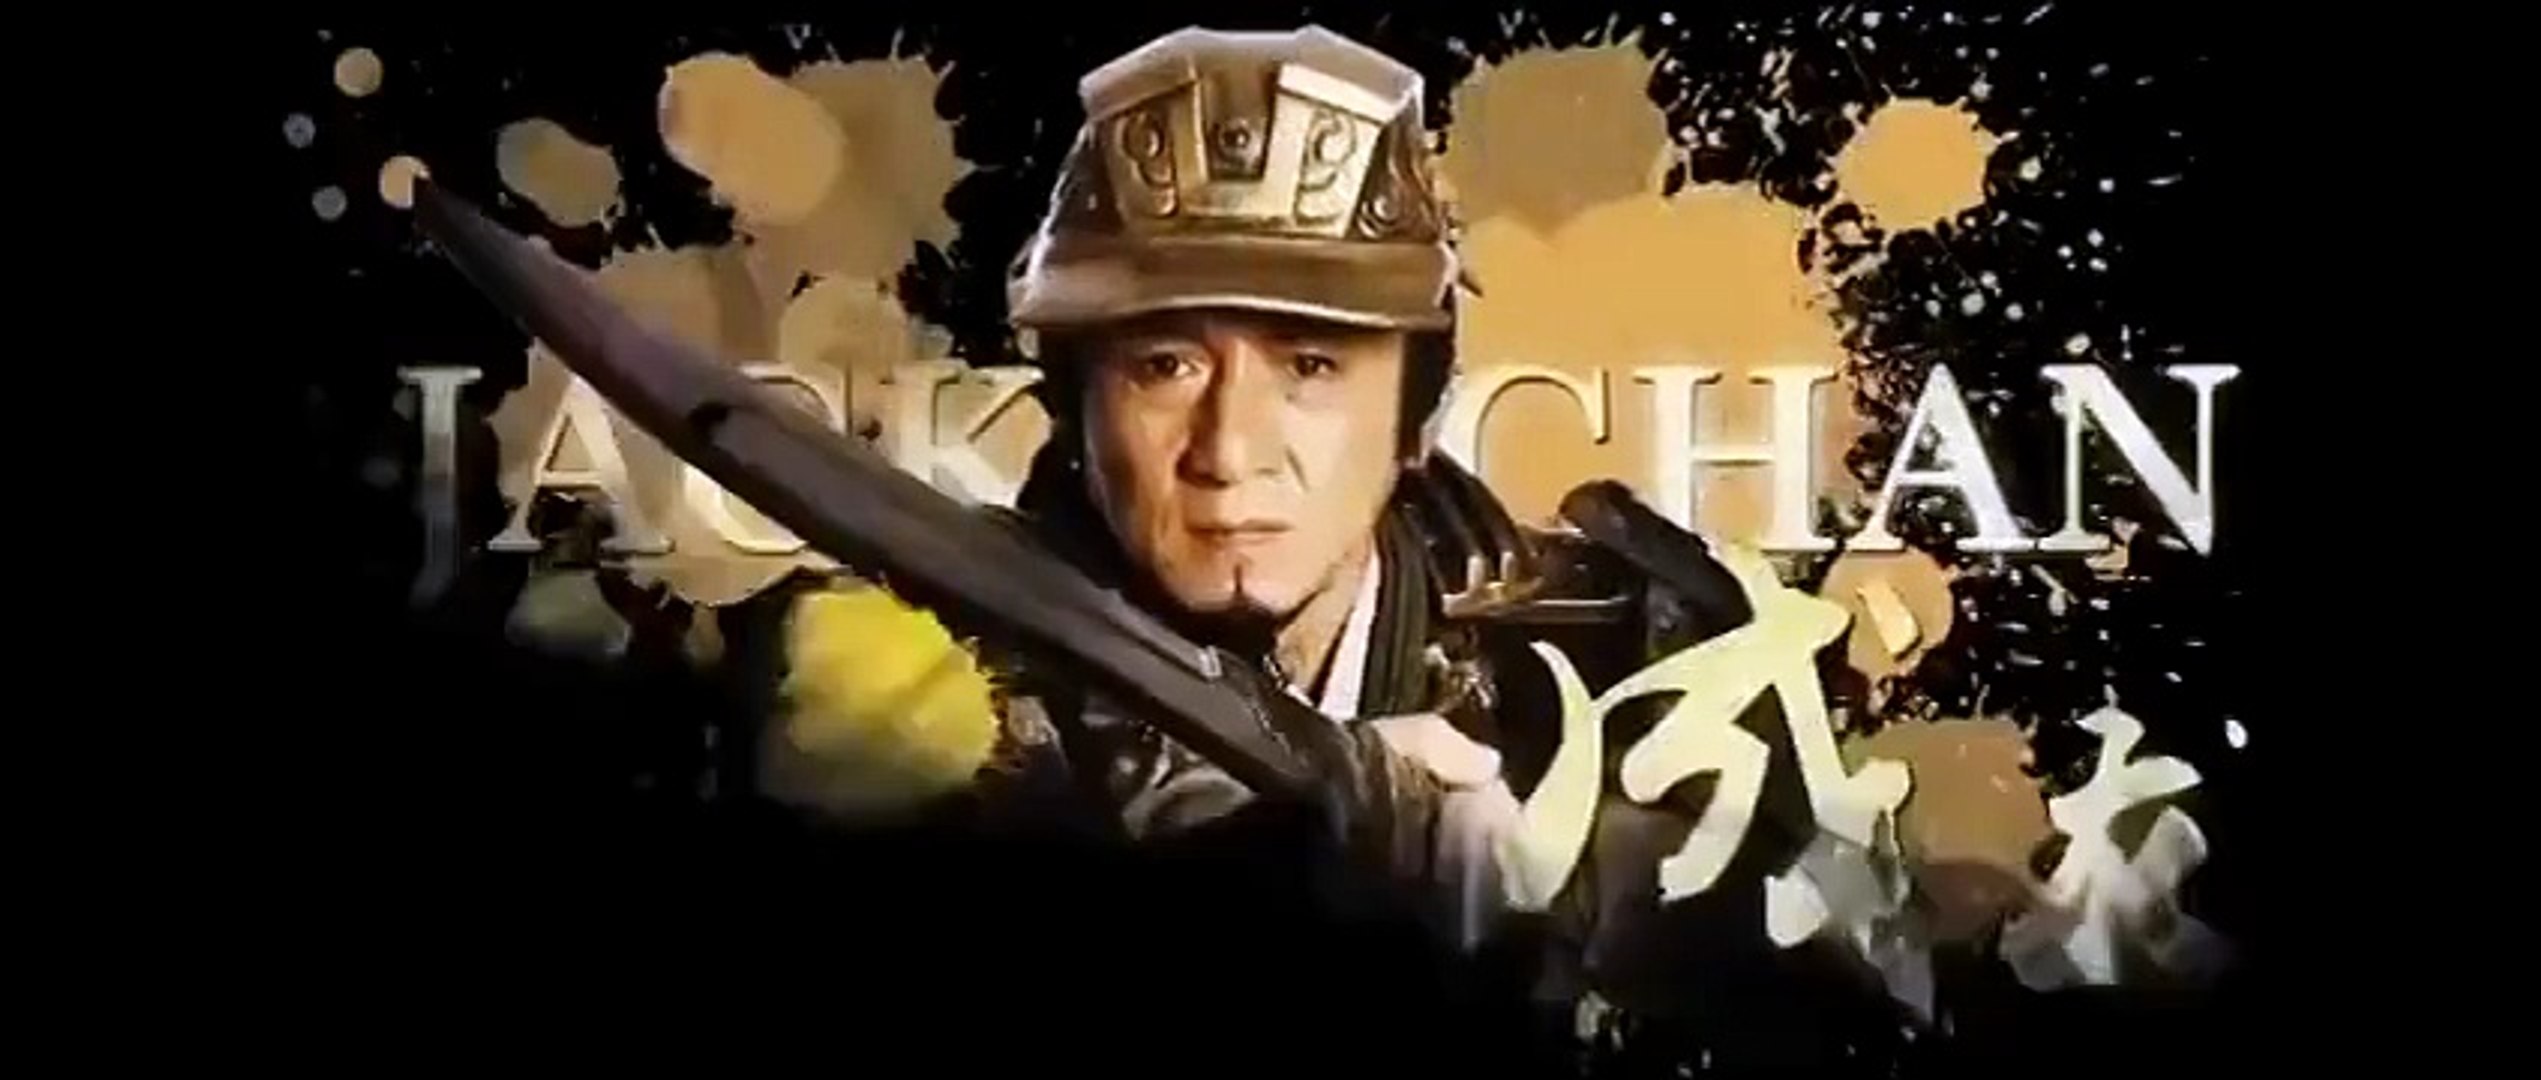 Dragon Blade Trailer Starring Jackie Chan